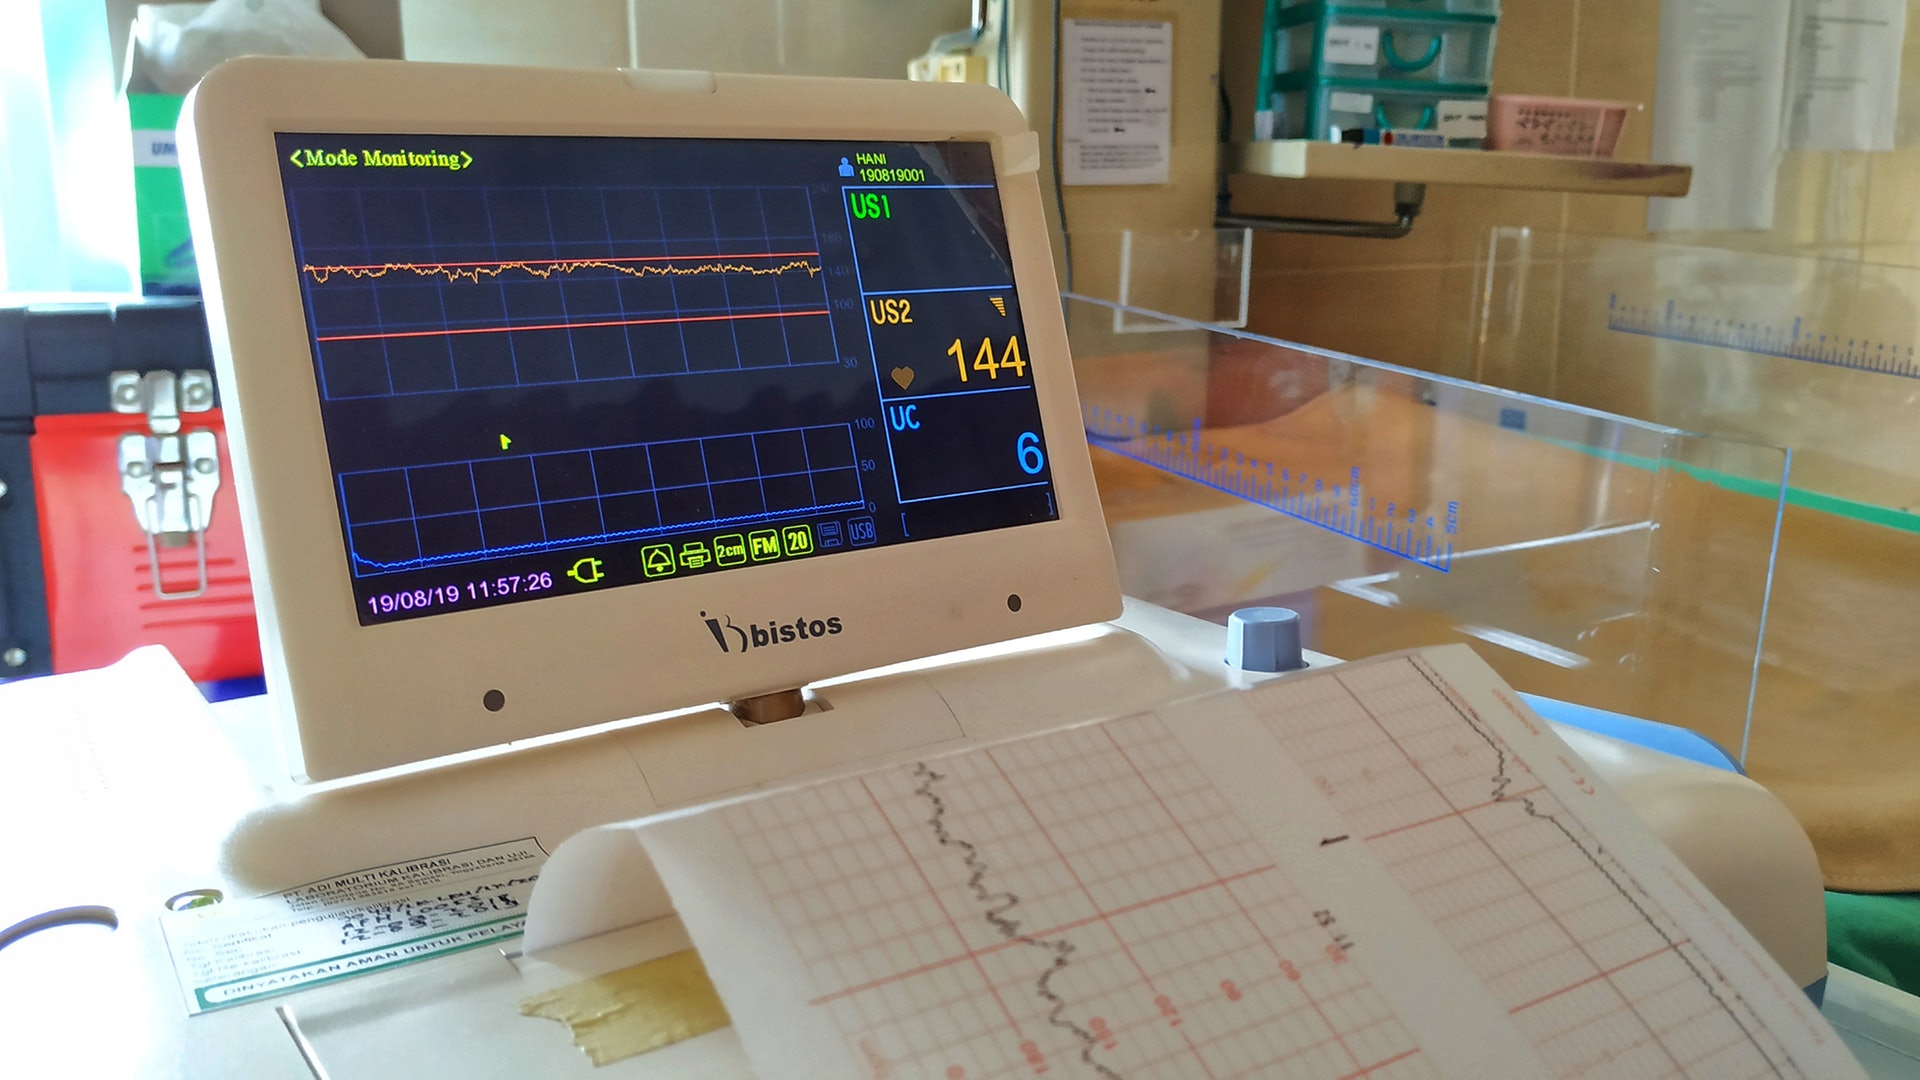 R先生雖然有運動習慣，但體檢時心電圖卻出現異常，顯示心臟有不尋常問題。（shutter stock）